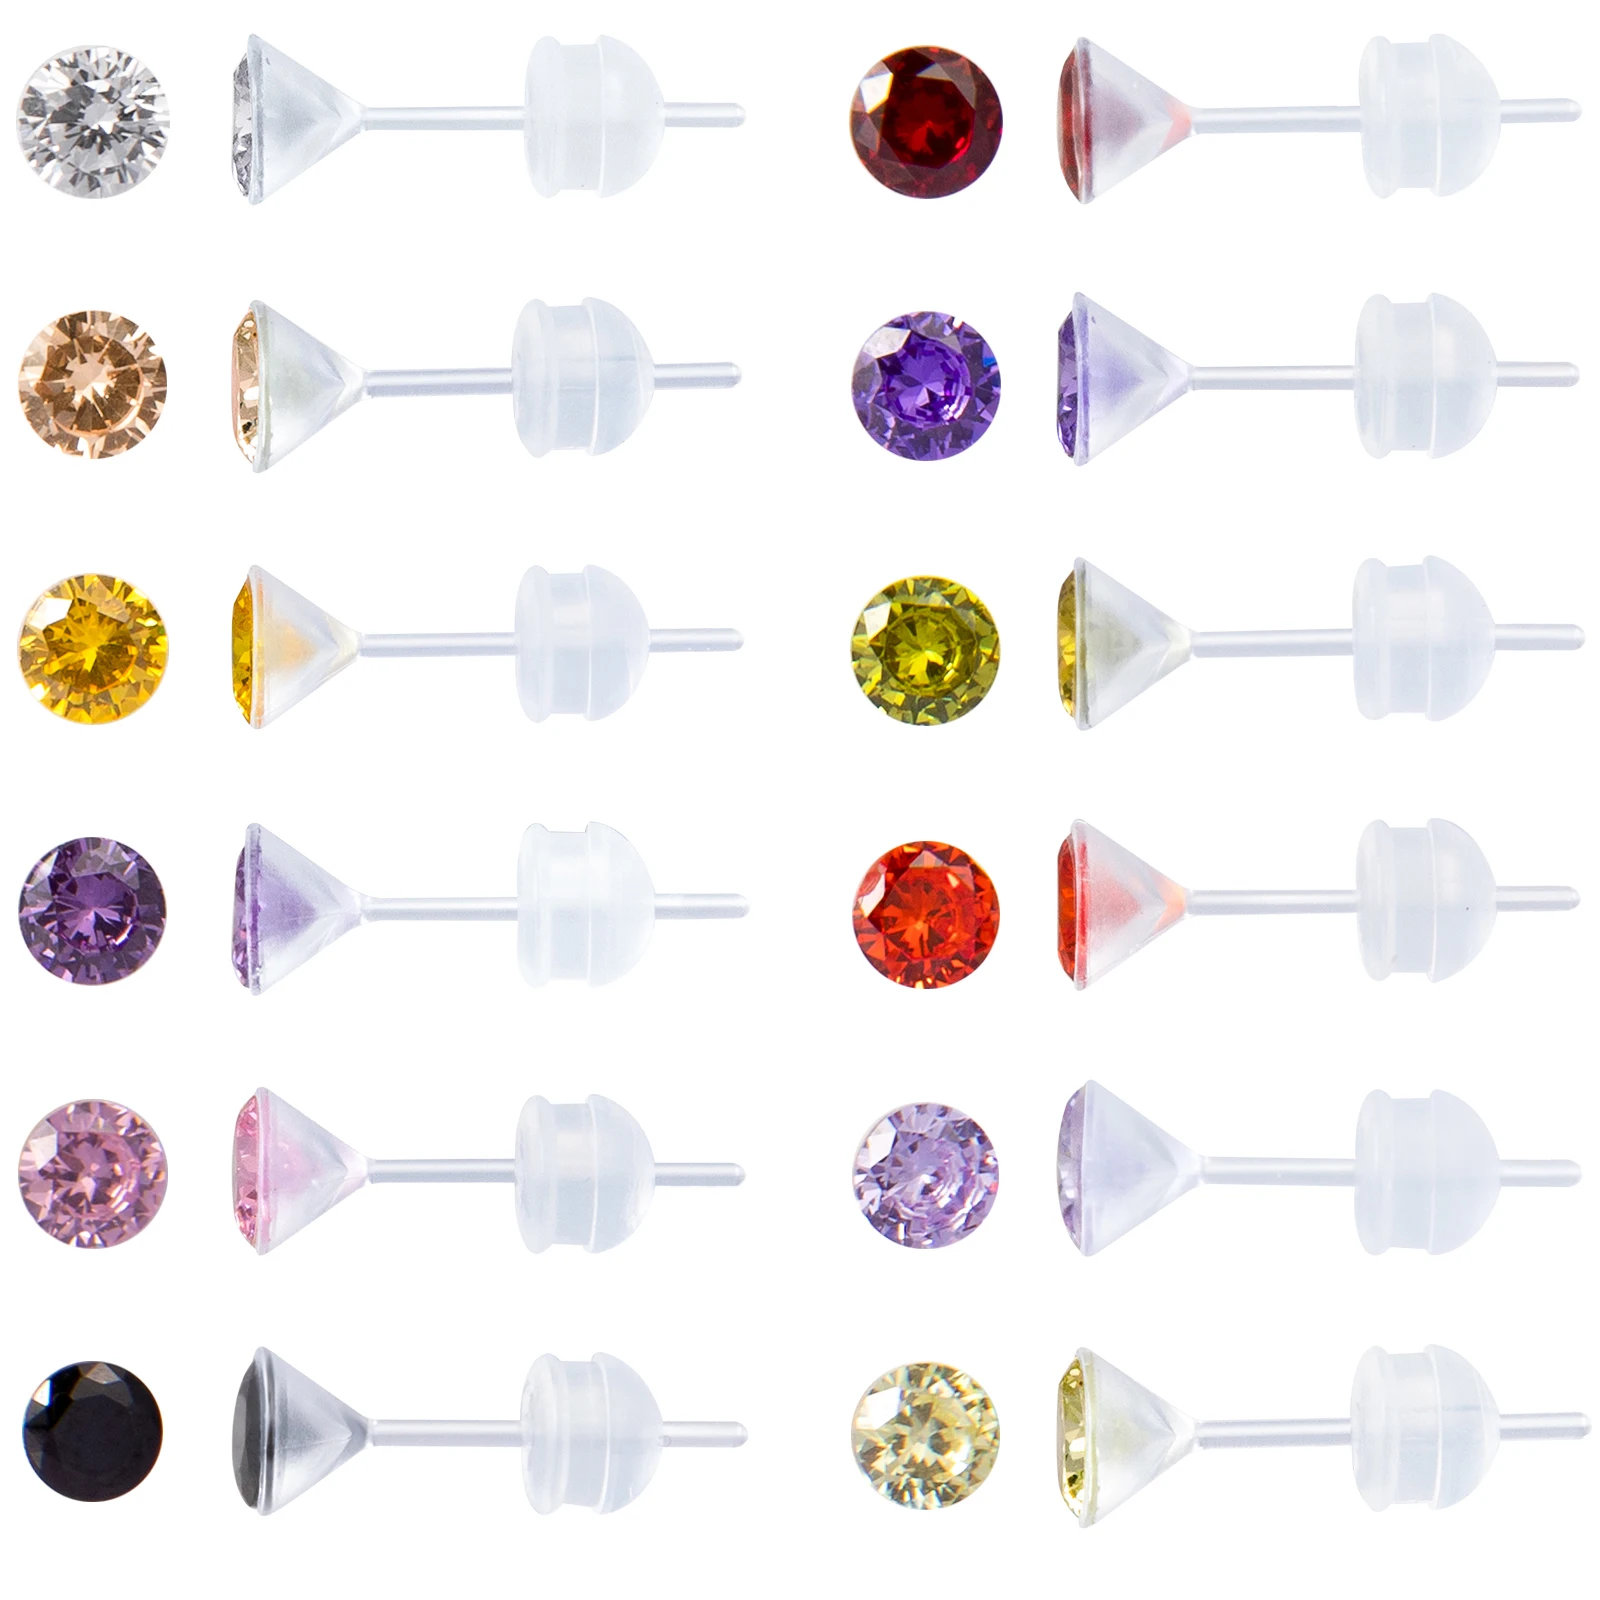 

12 Pairs Plastic Stud Earrings for Sensitive Ears,Birthstone CZ Invisable Stud Earring Set for Women Girls Серьги Гвоздики